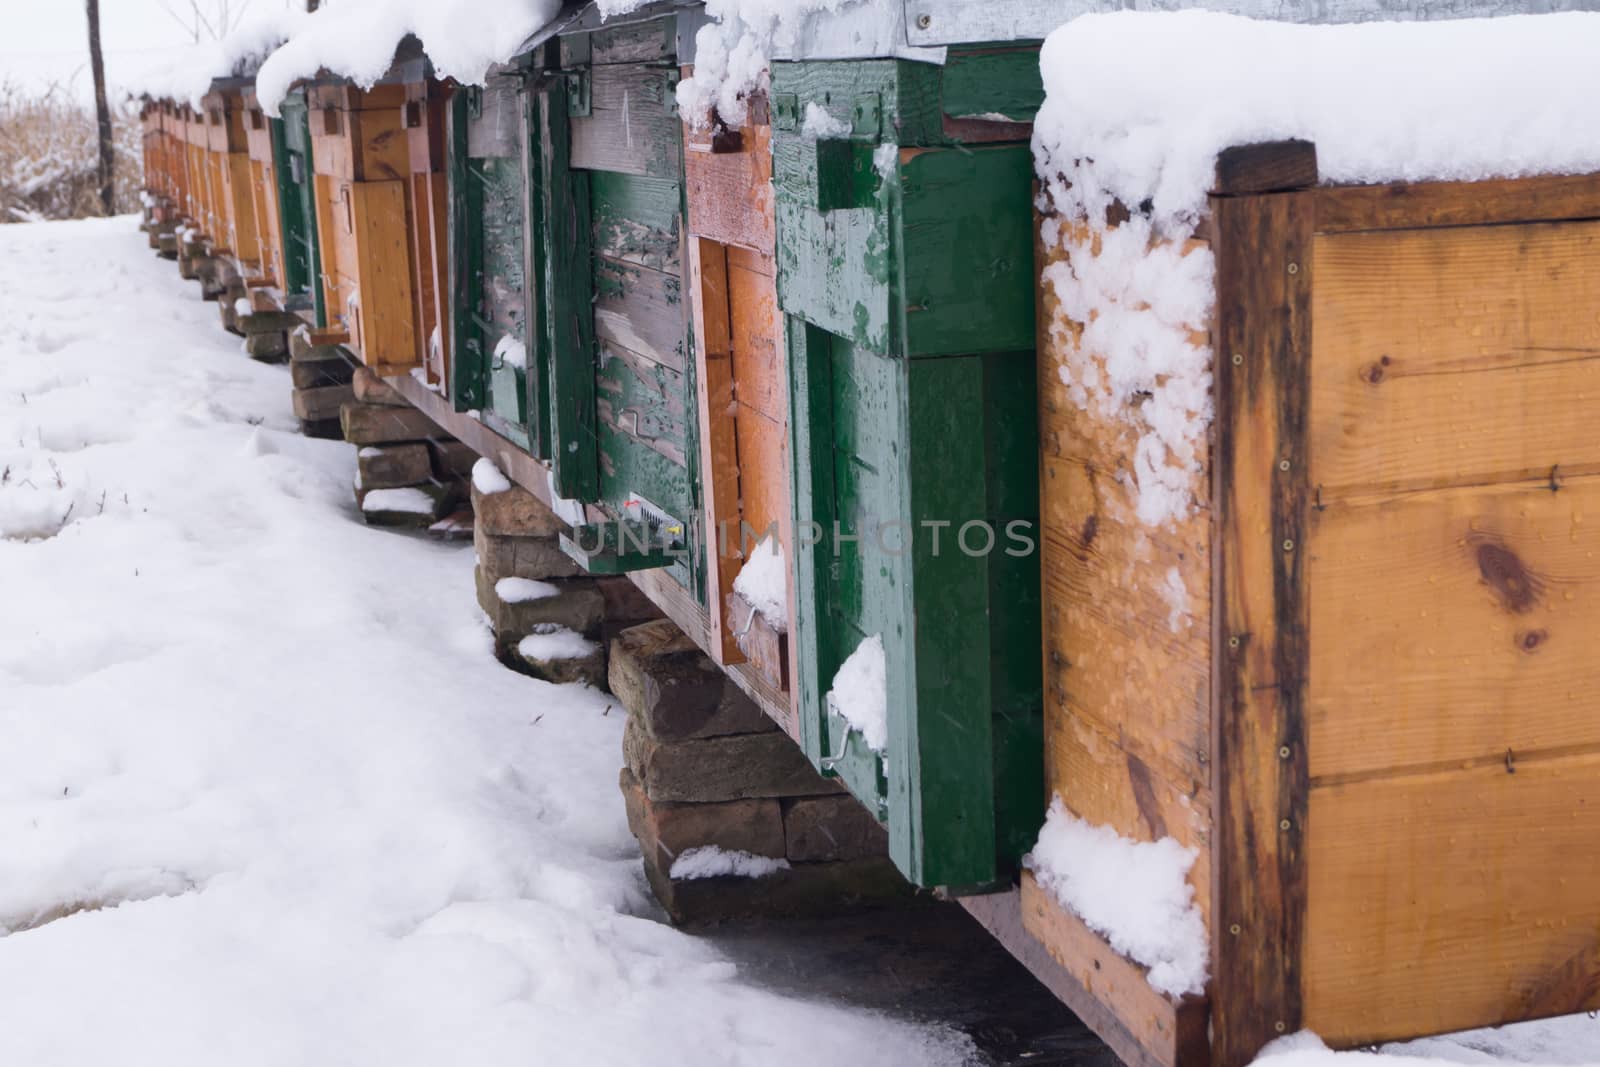 The beekeepers work in winter. by dadalia